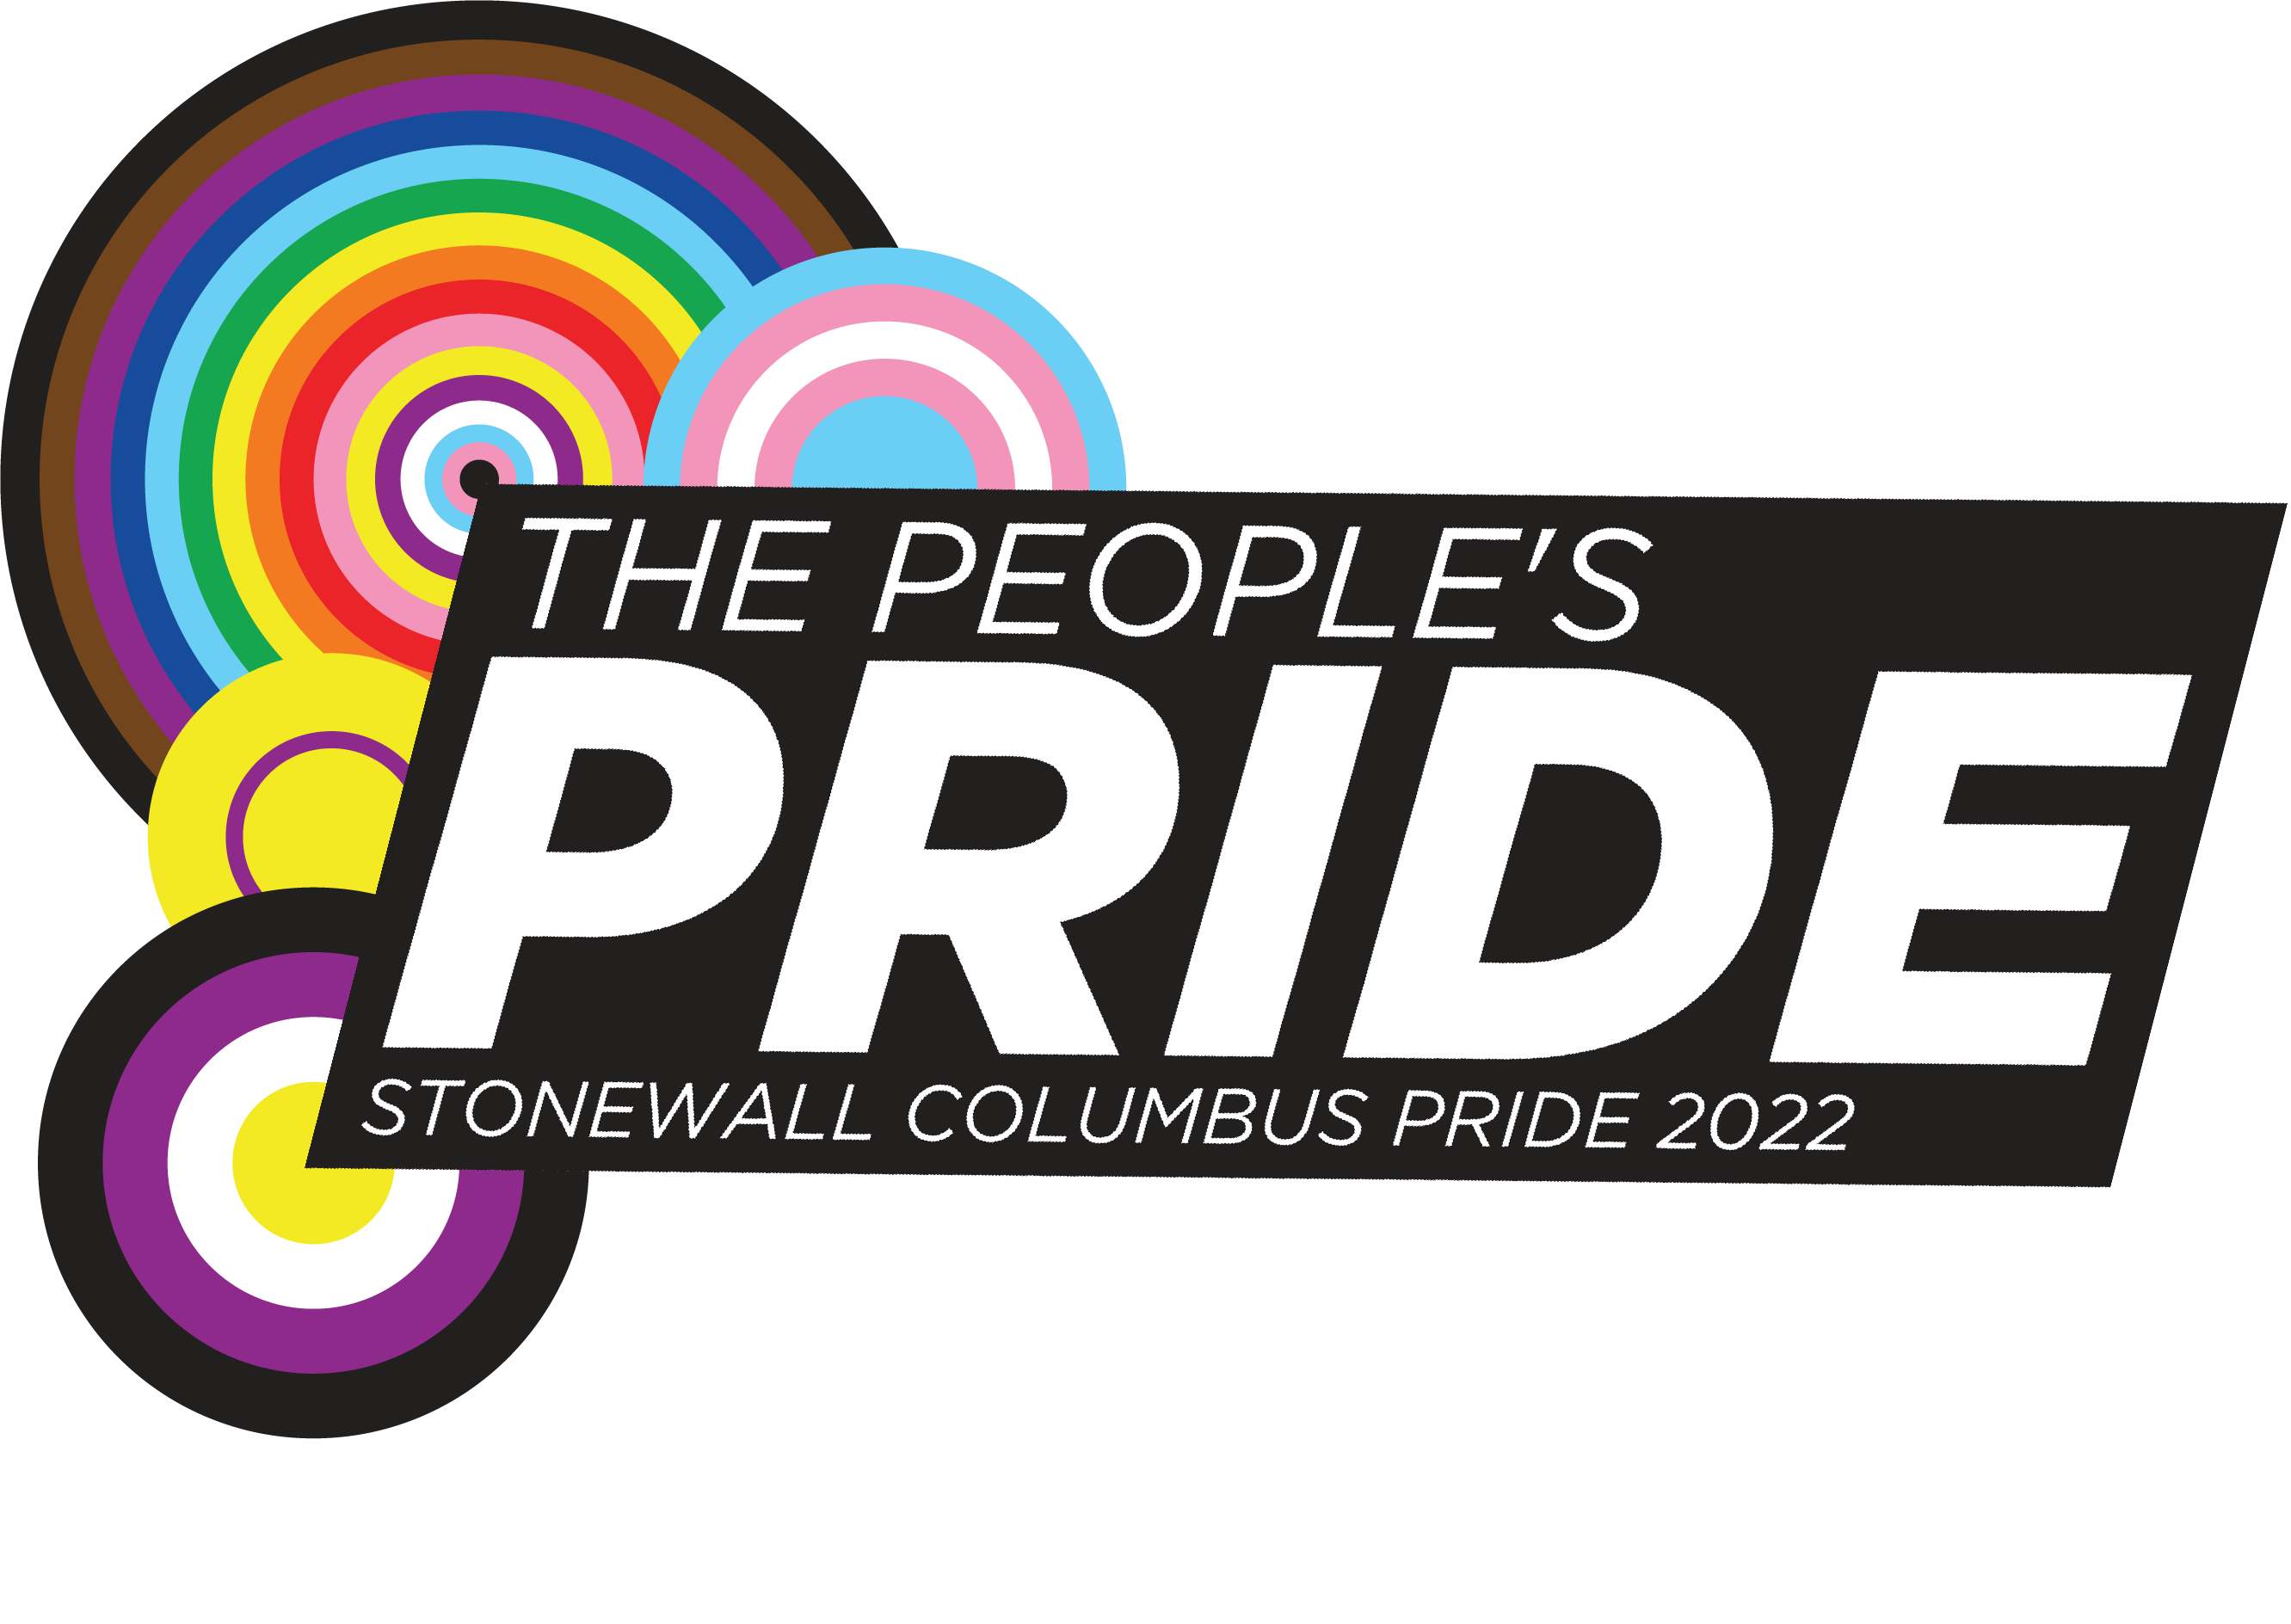 Stonewall Columbus Pride